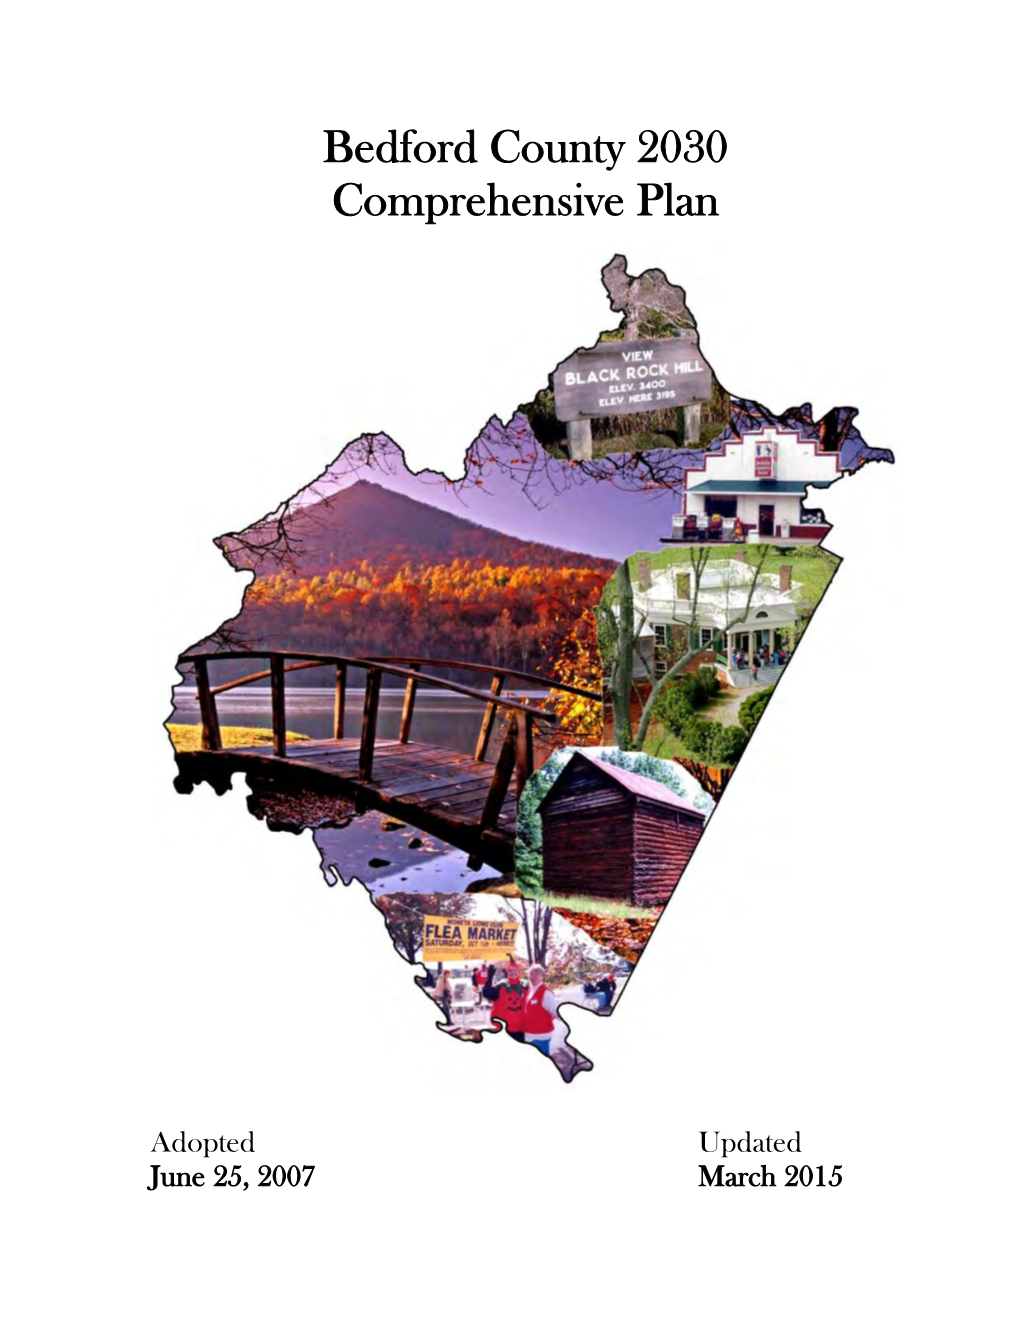 Bedford County 2030 Comprehensive Plan